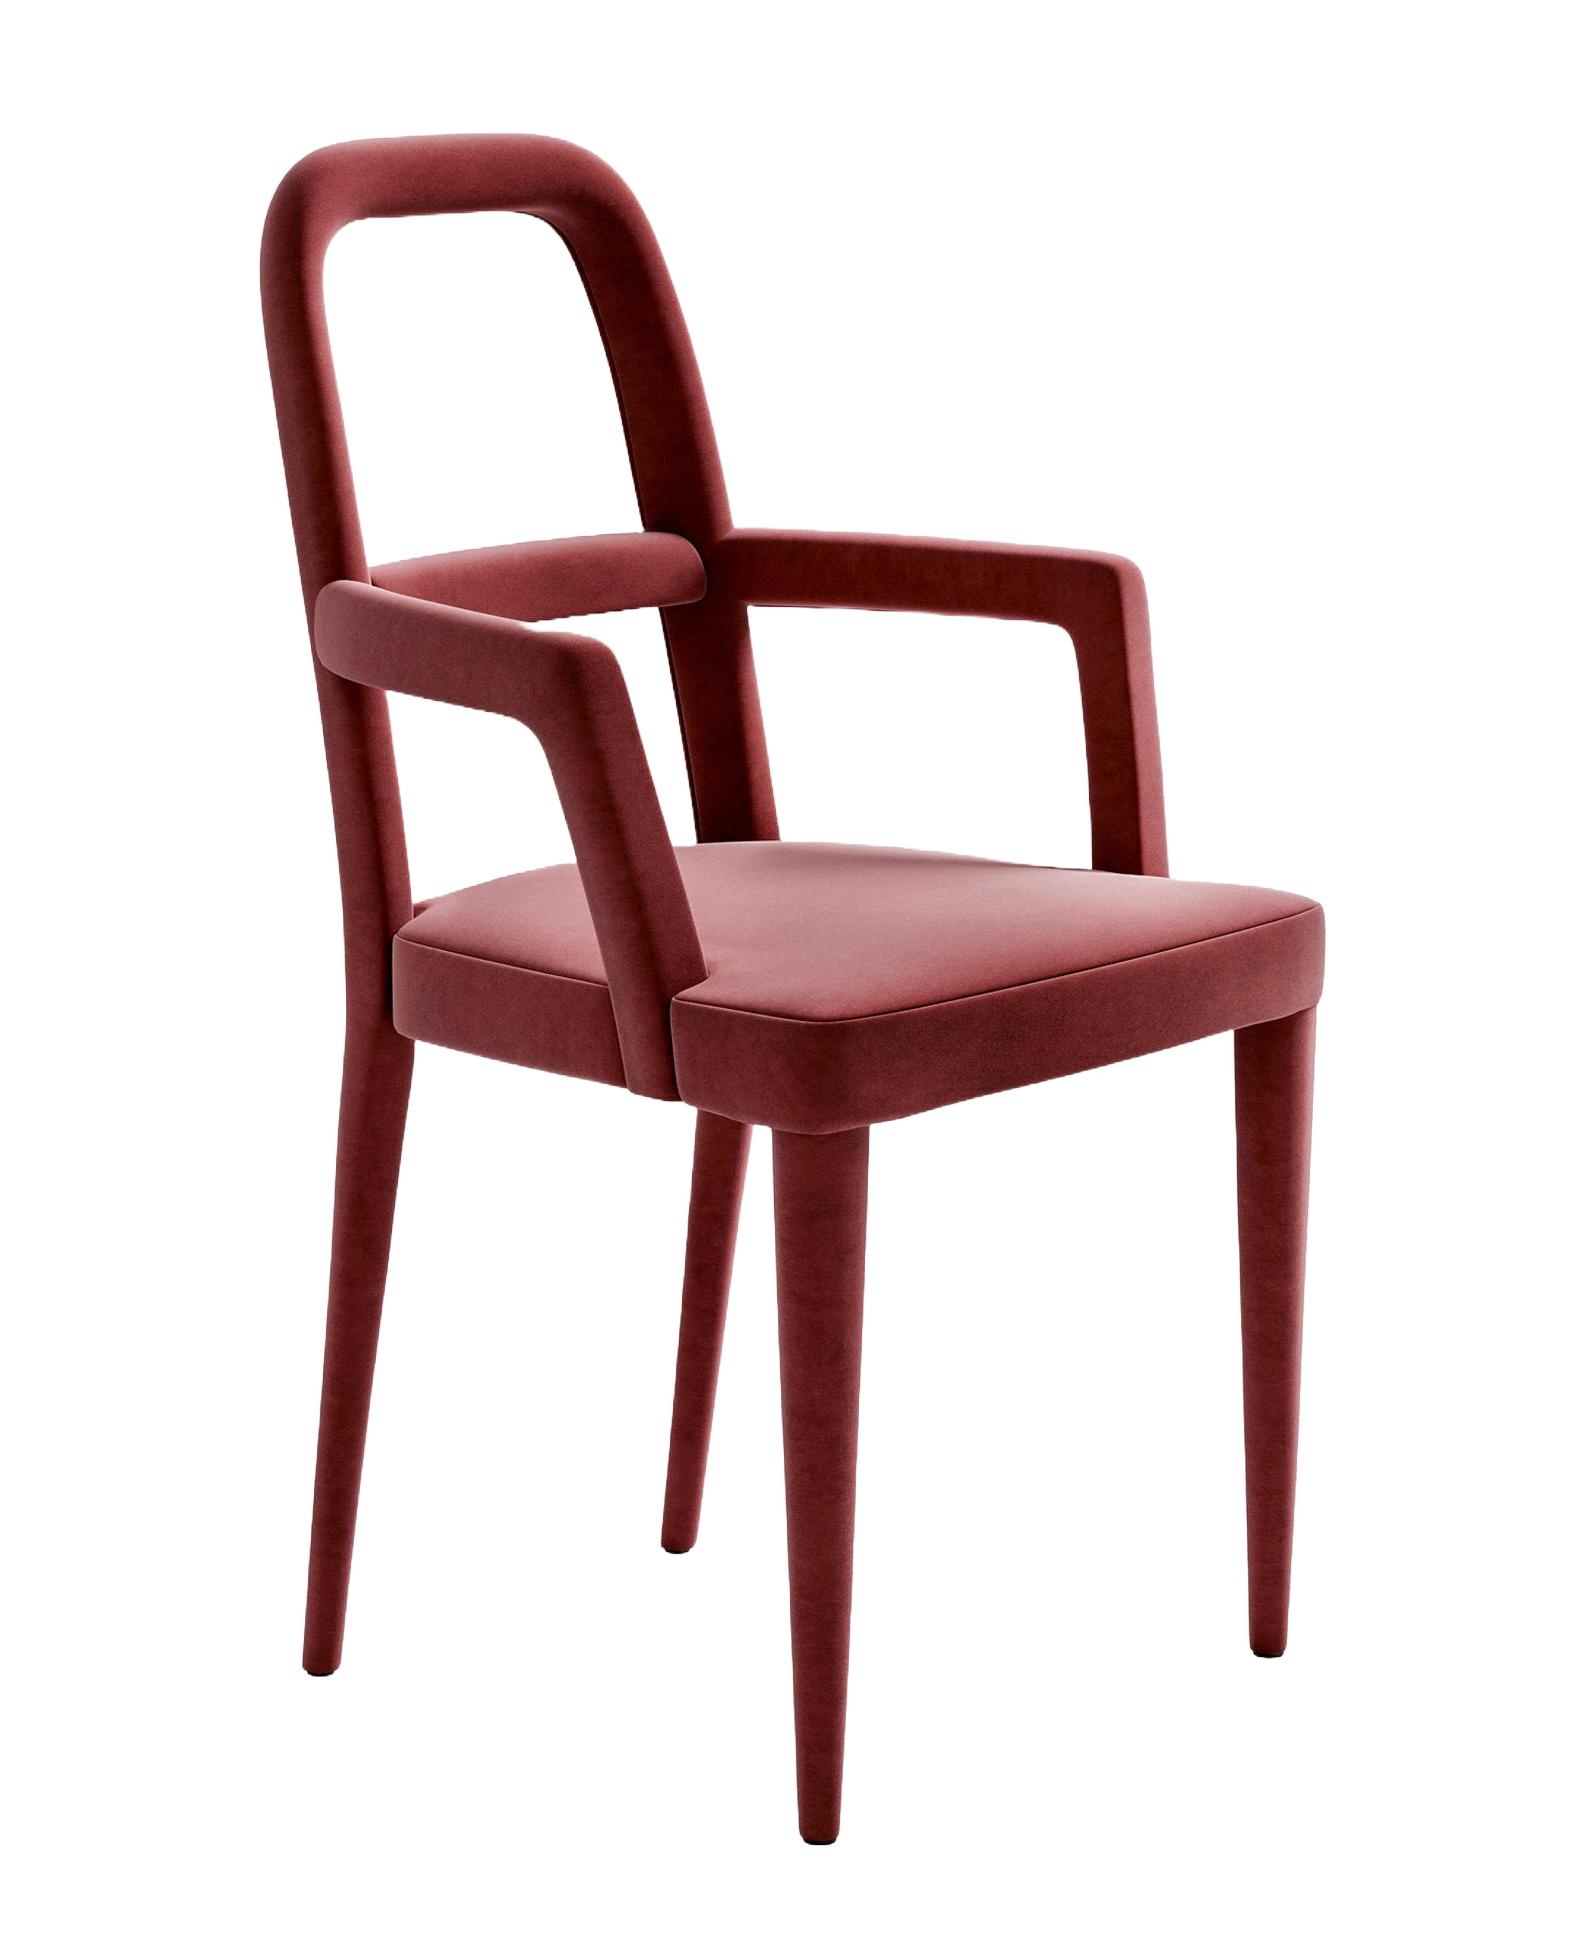 Elegant Upholstered Chair with Armrests